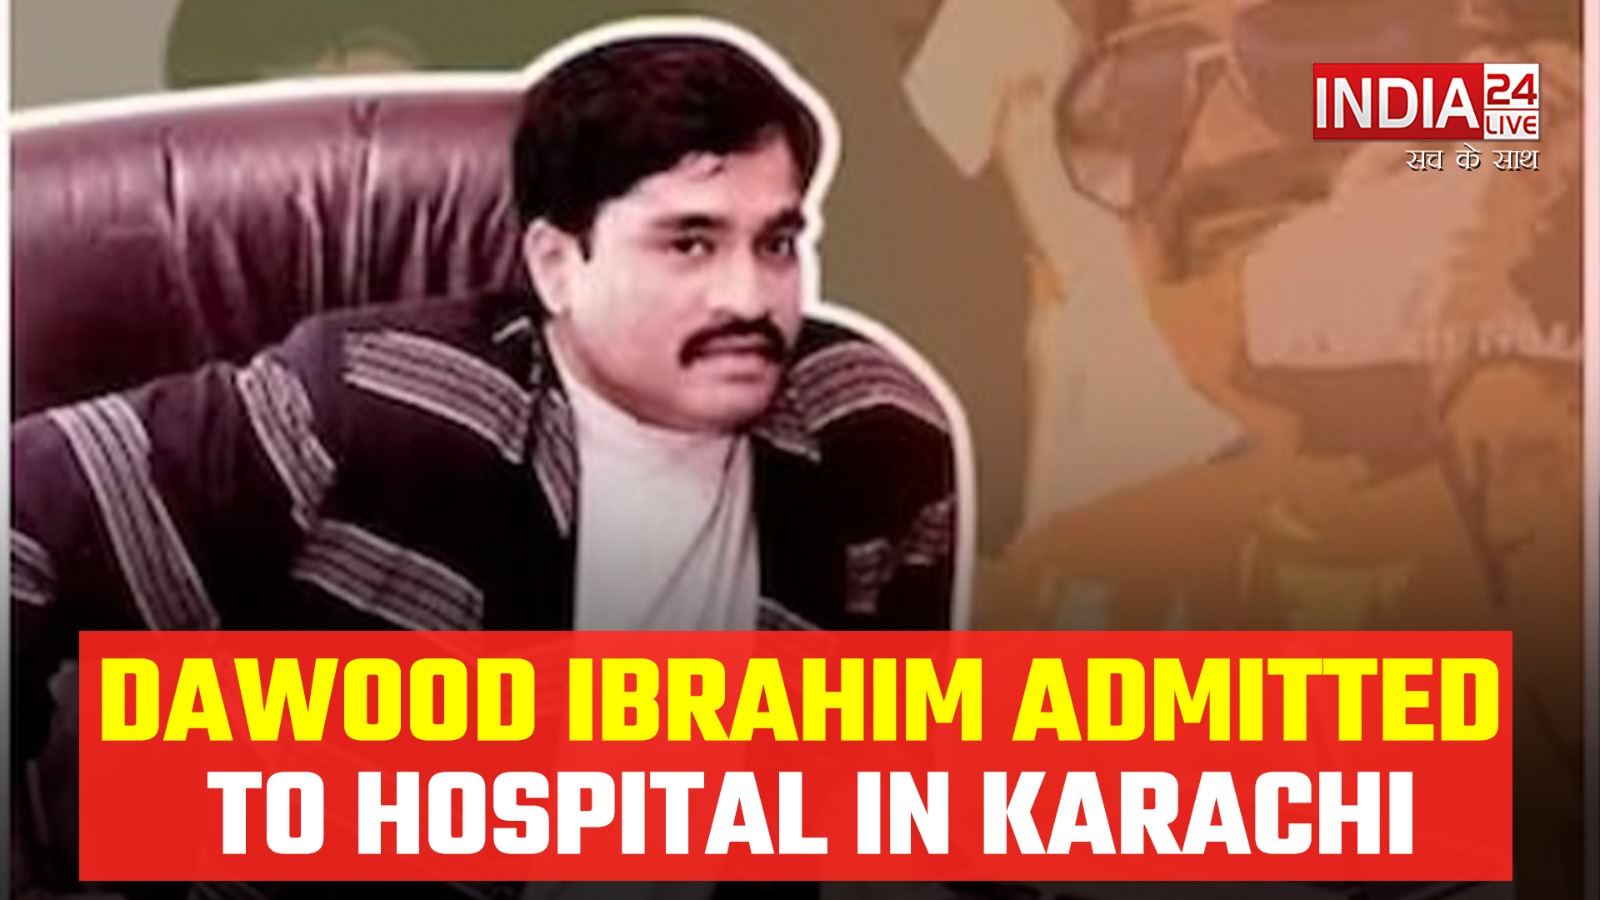 Dawood Ibrahim, India's most wanted, in Karachi hospital, floor sealed